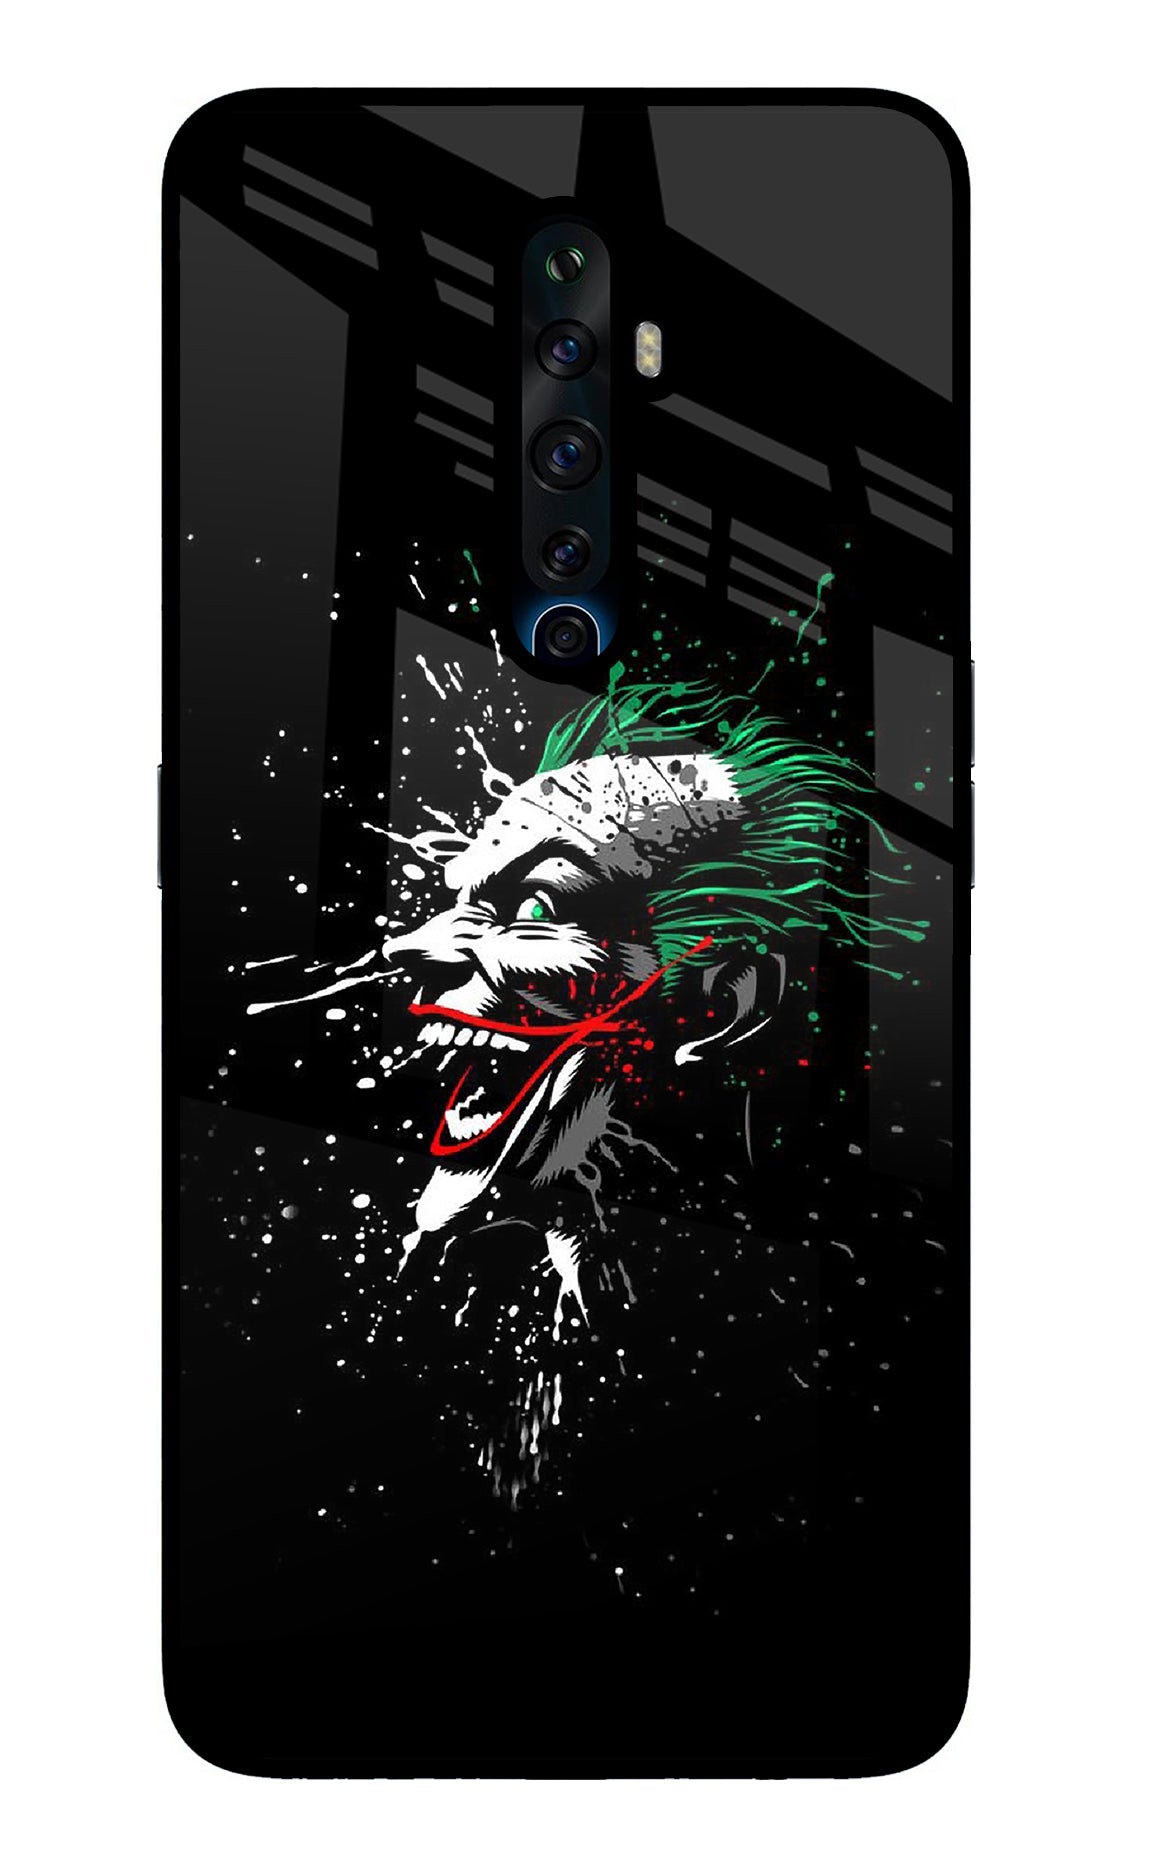 Joker Oppo Reno2 Z Glass Case